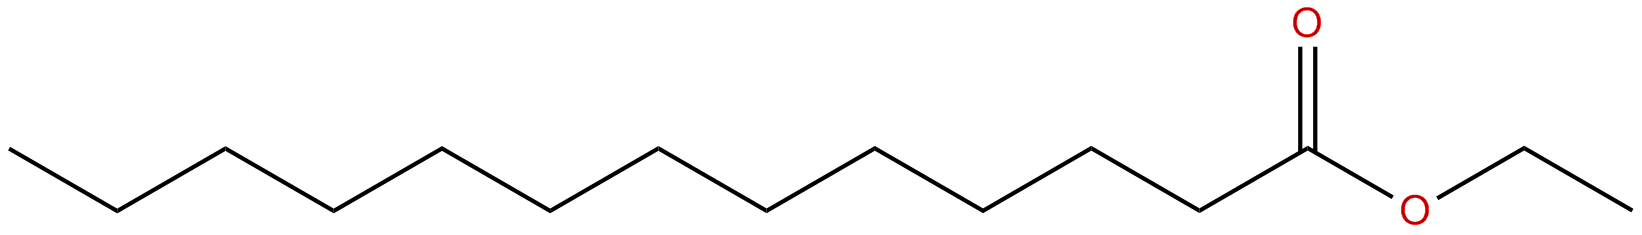 Image of ethyl tridecanoate